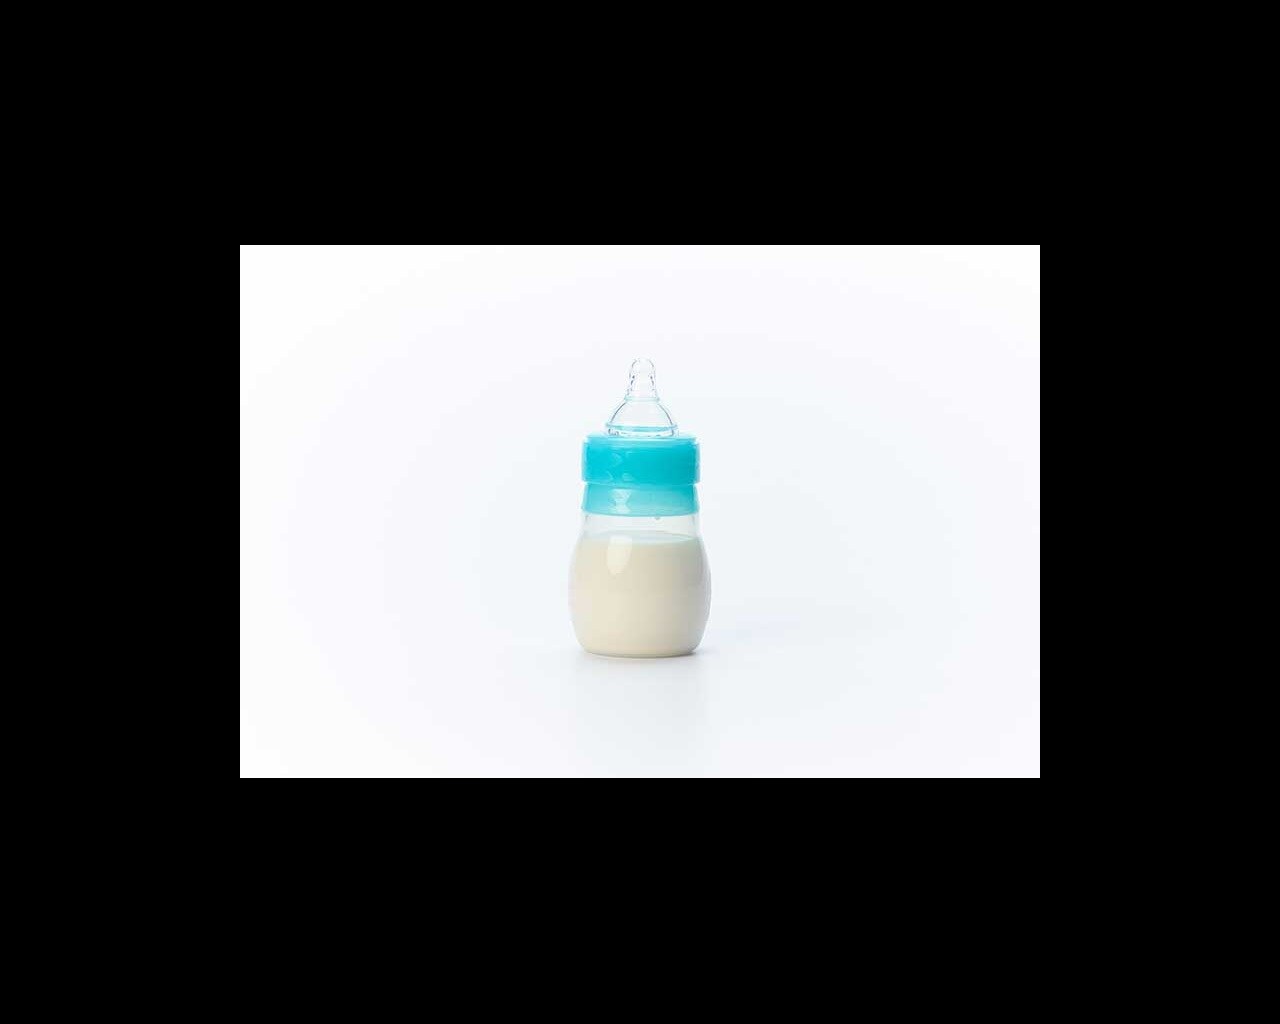 6 ounce bottle of breastmilk or formula